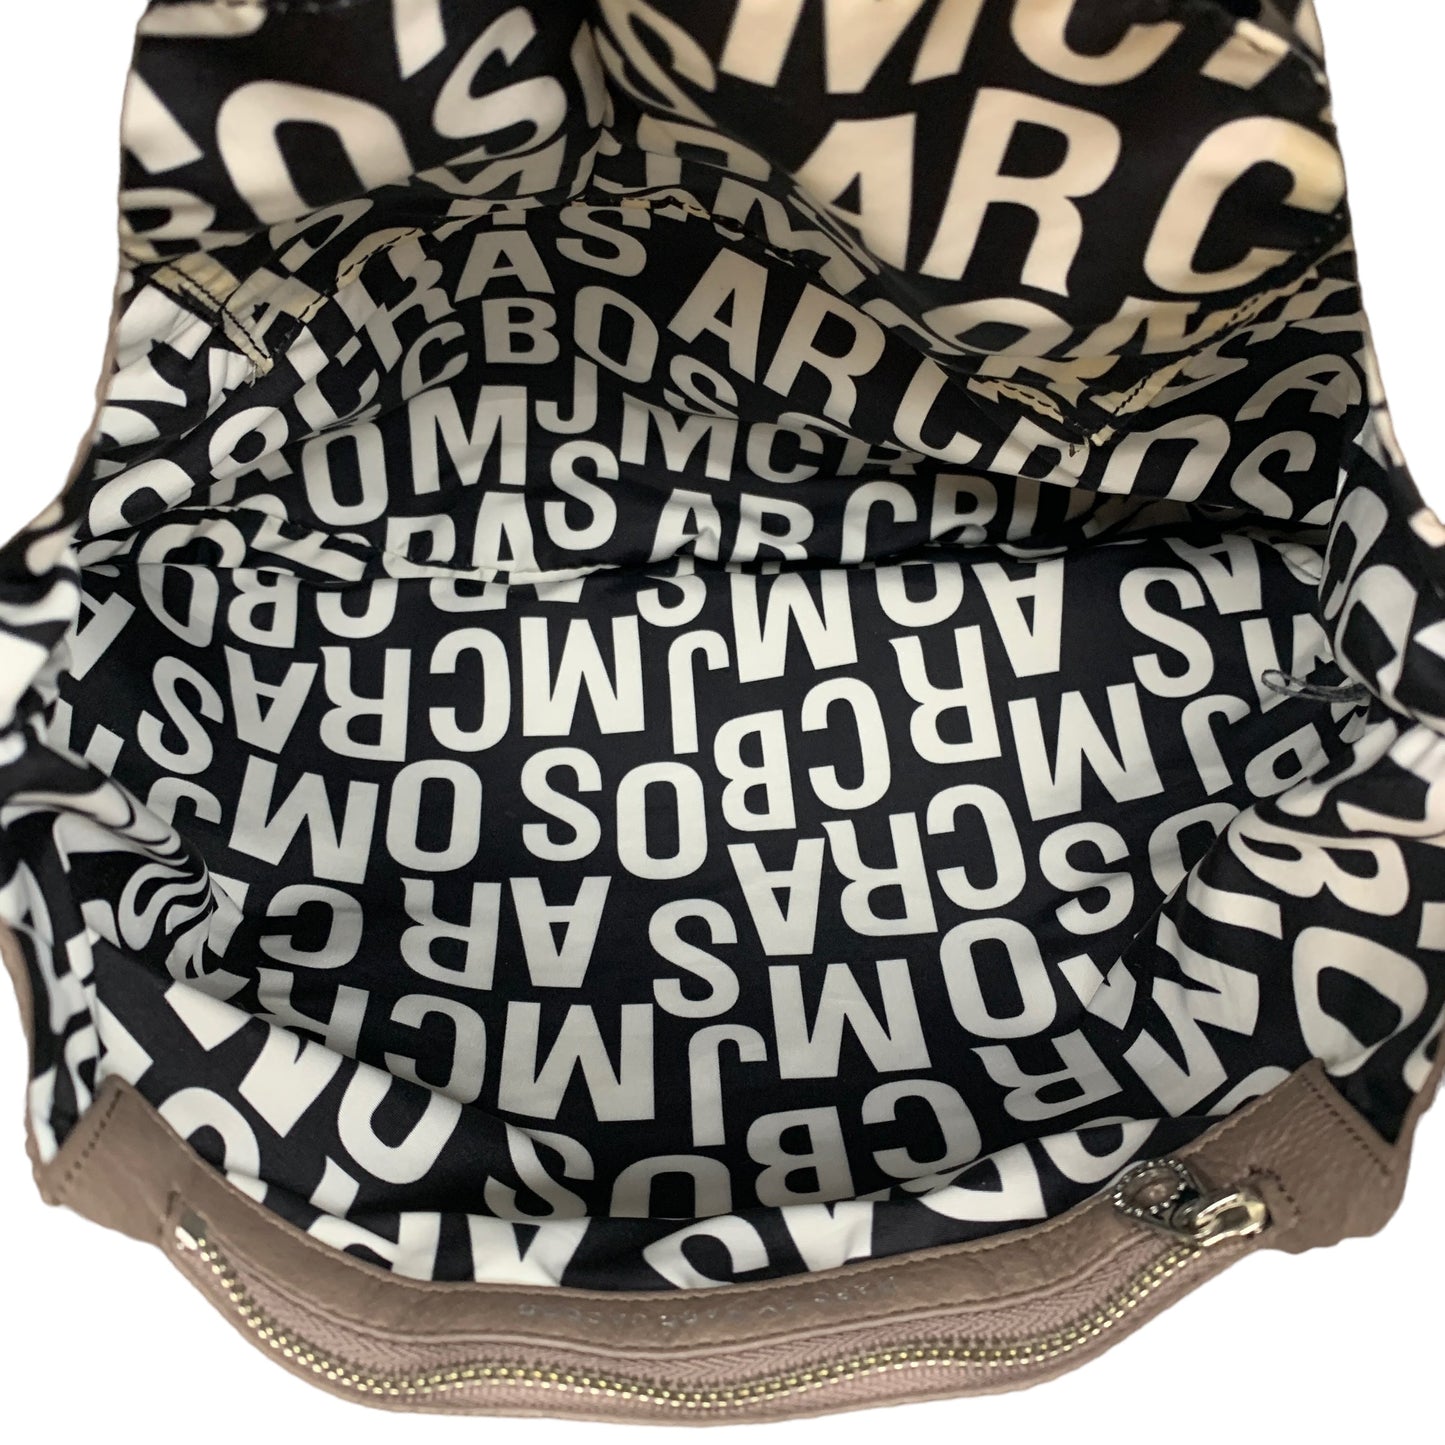 Handbag Designer By Marc By Marc Jacobs  Size: Medium